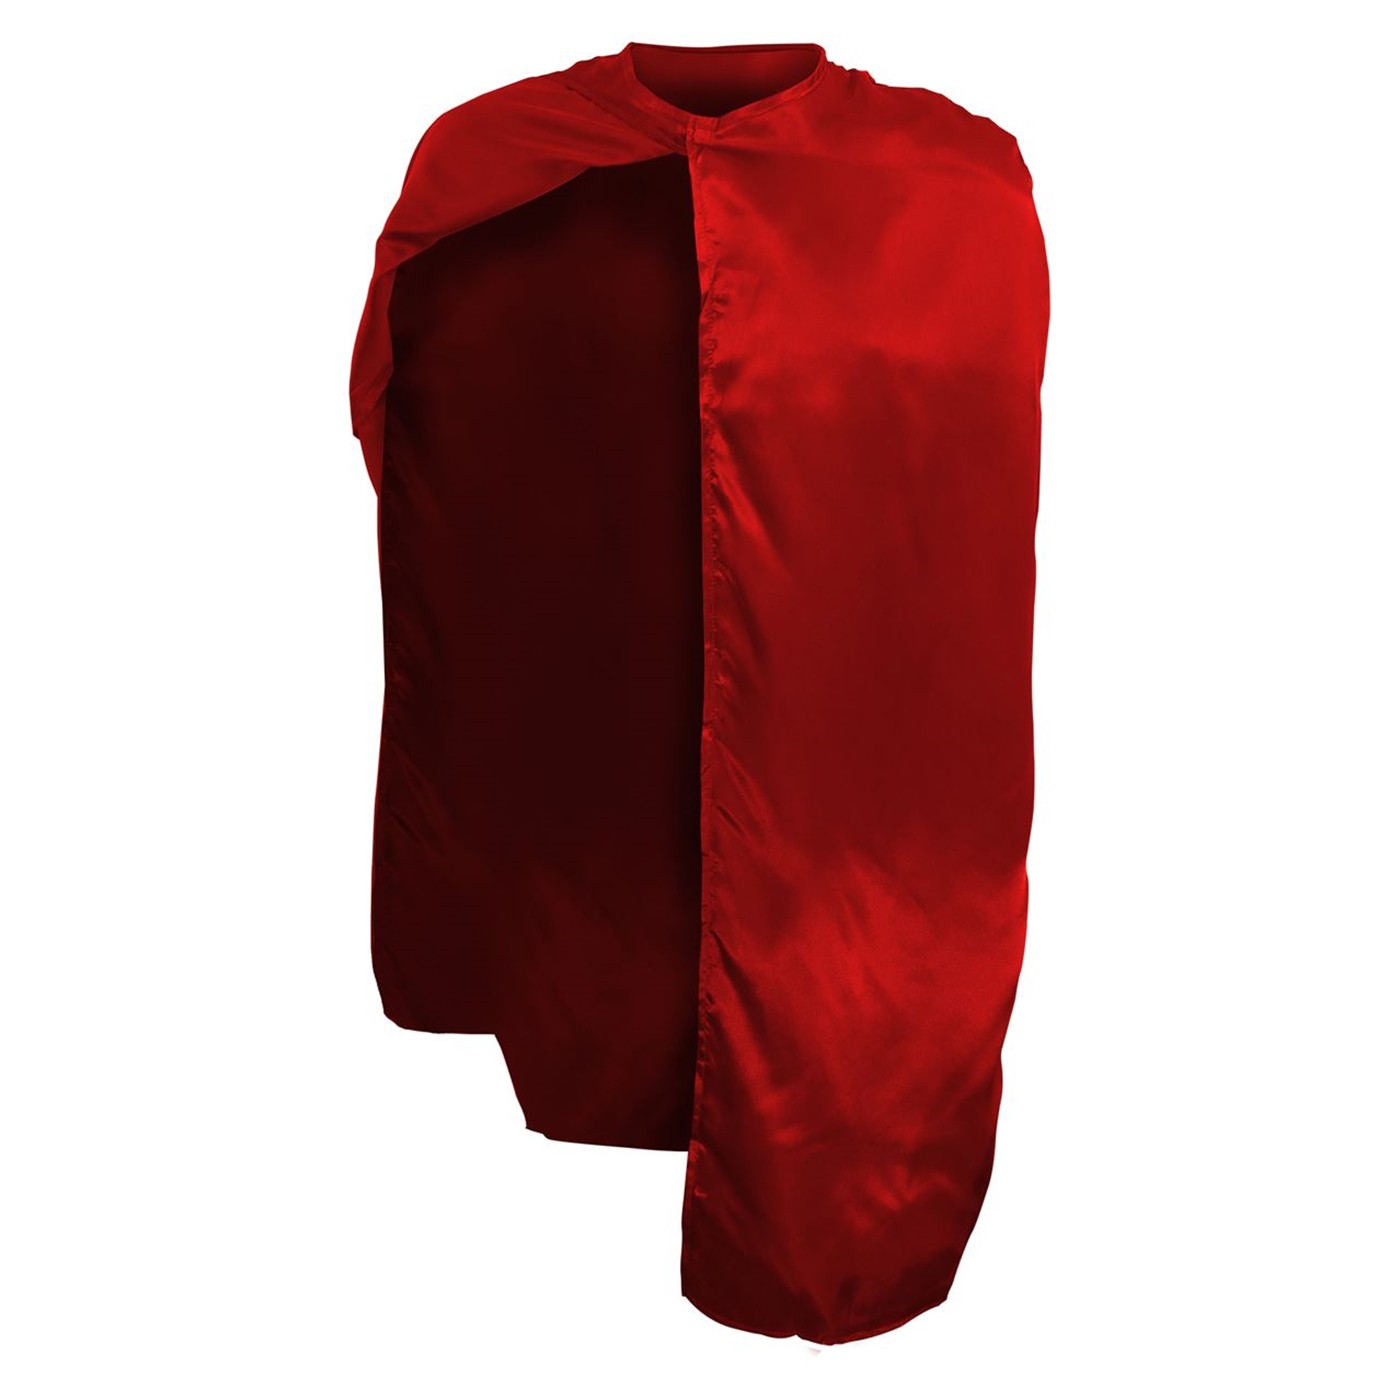 Adult Costume Red Hero Cape